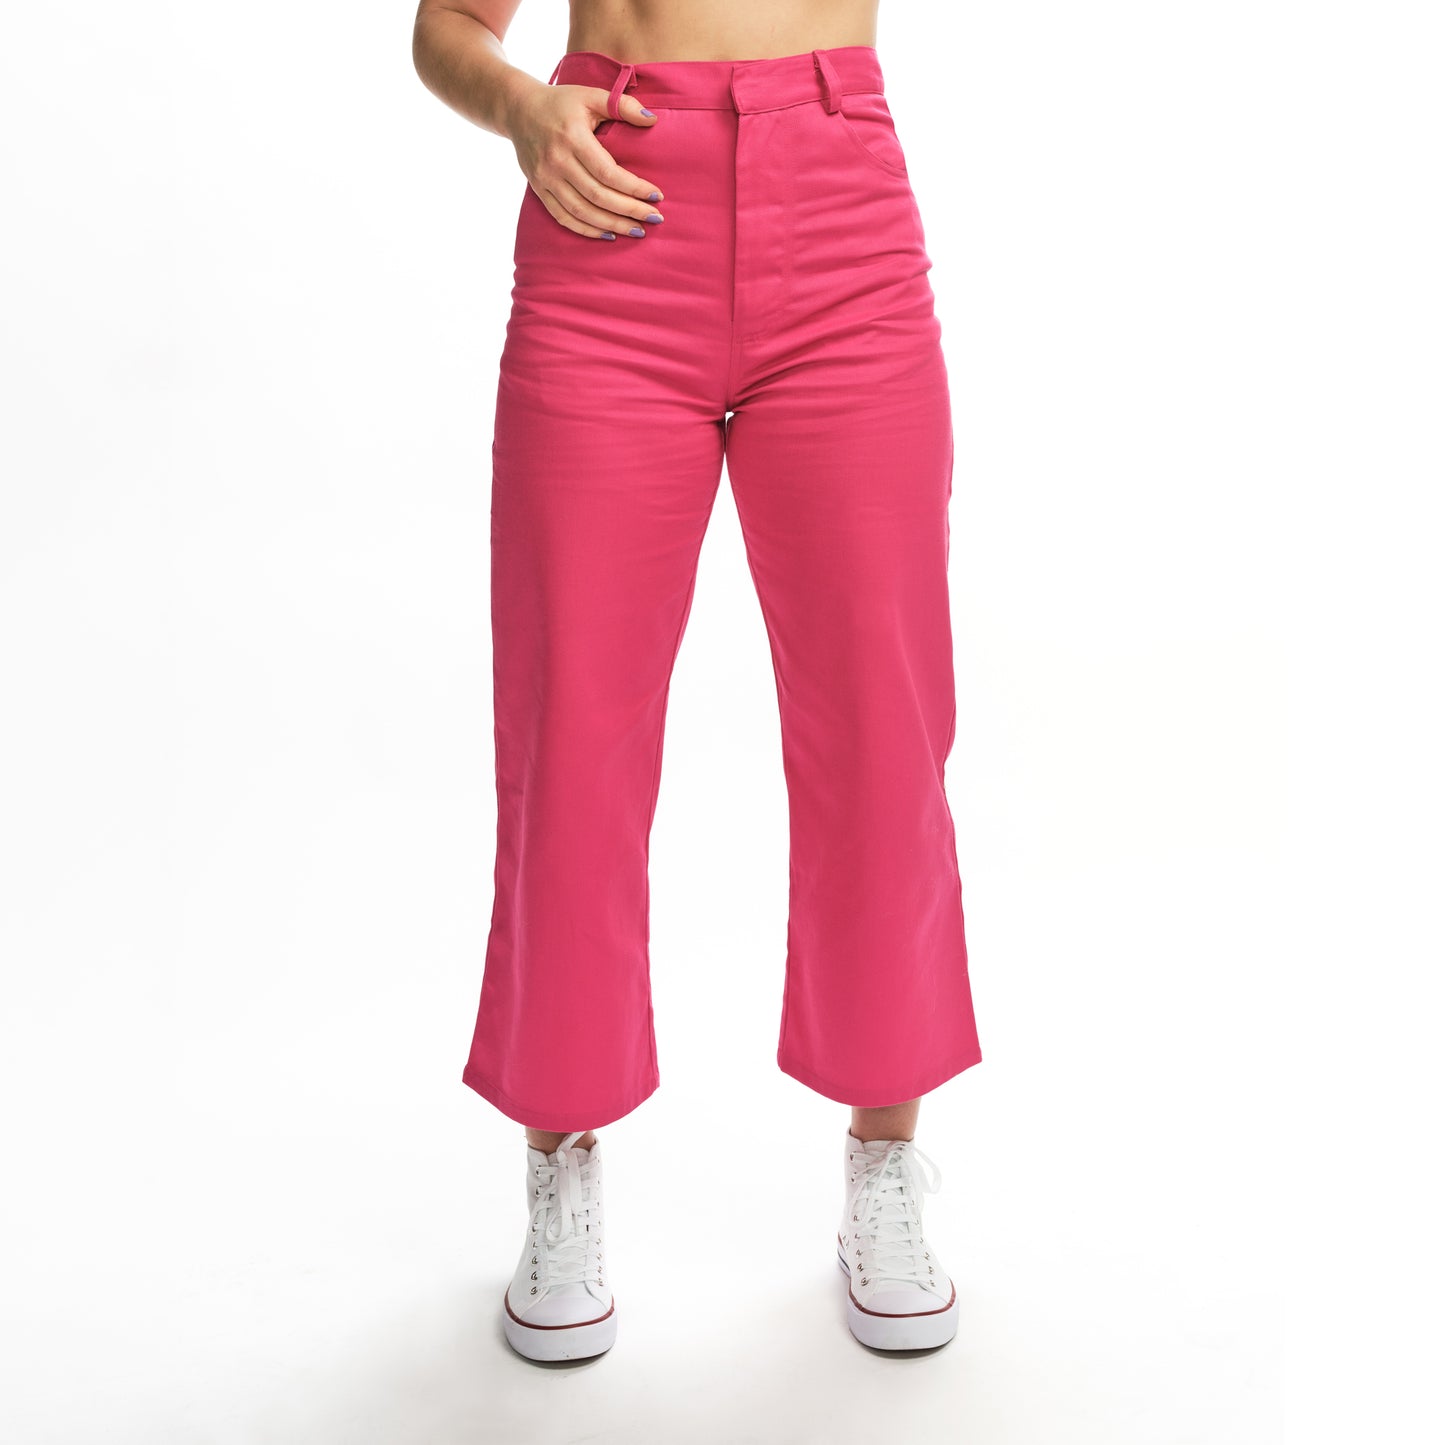 Booker Pants - Hot Pink